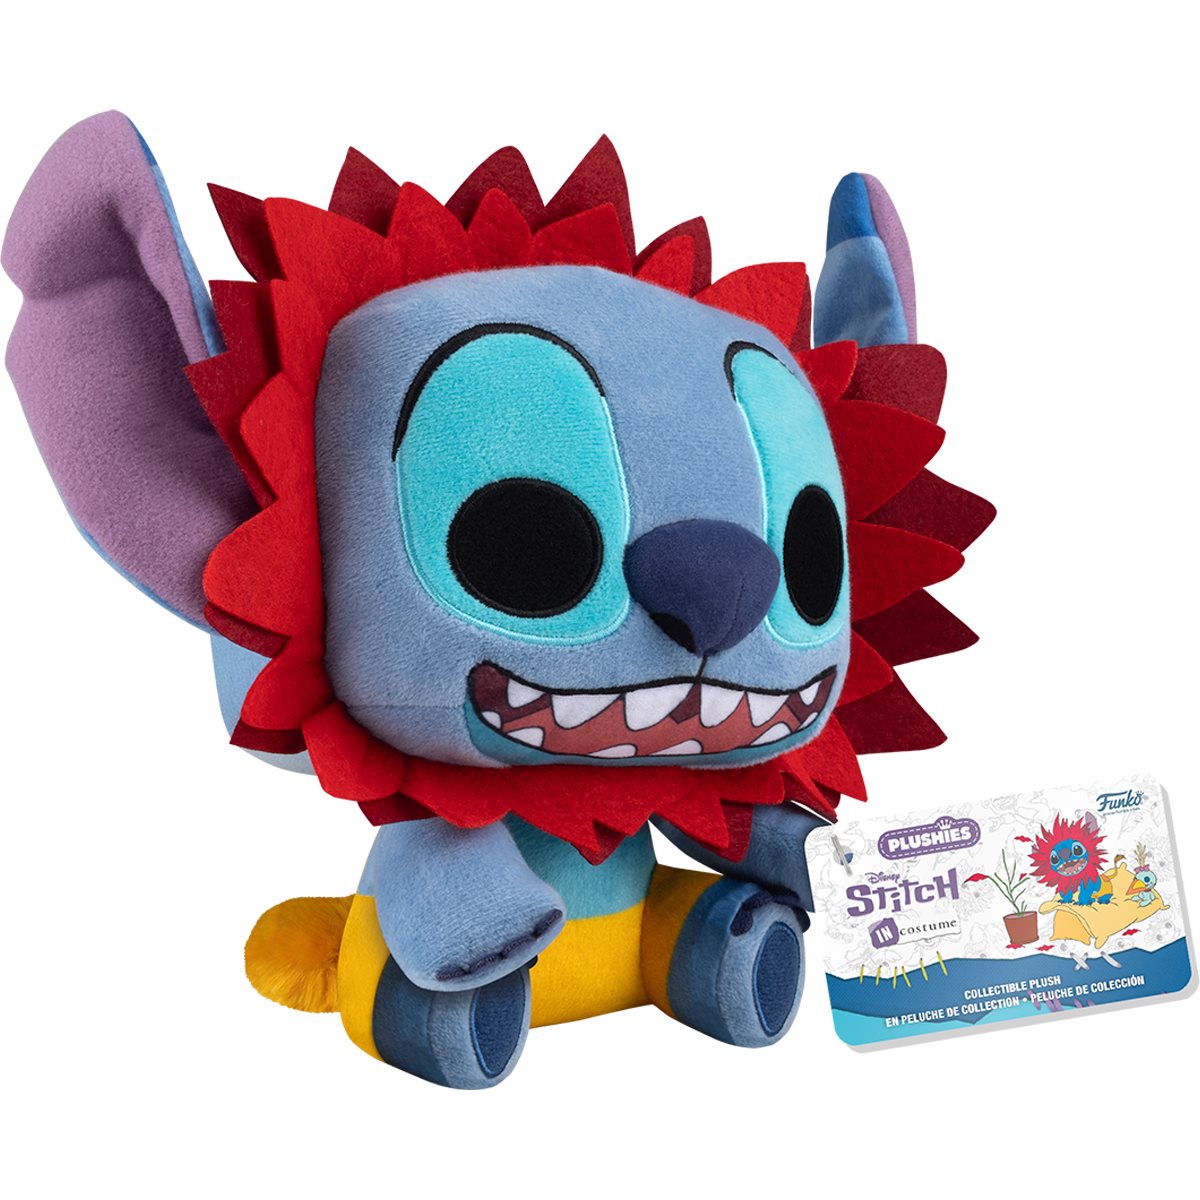 Funko Pop Plush: Disney Stitch In Costume - Stitch Como Simba 7 Pulgadas